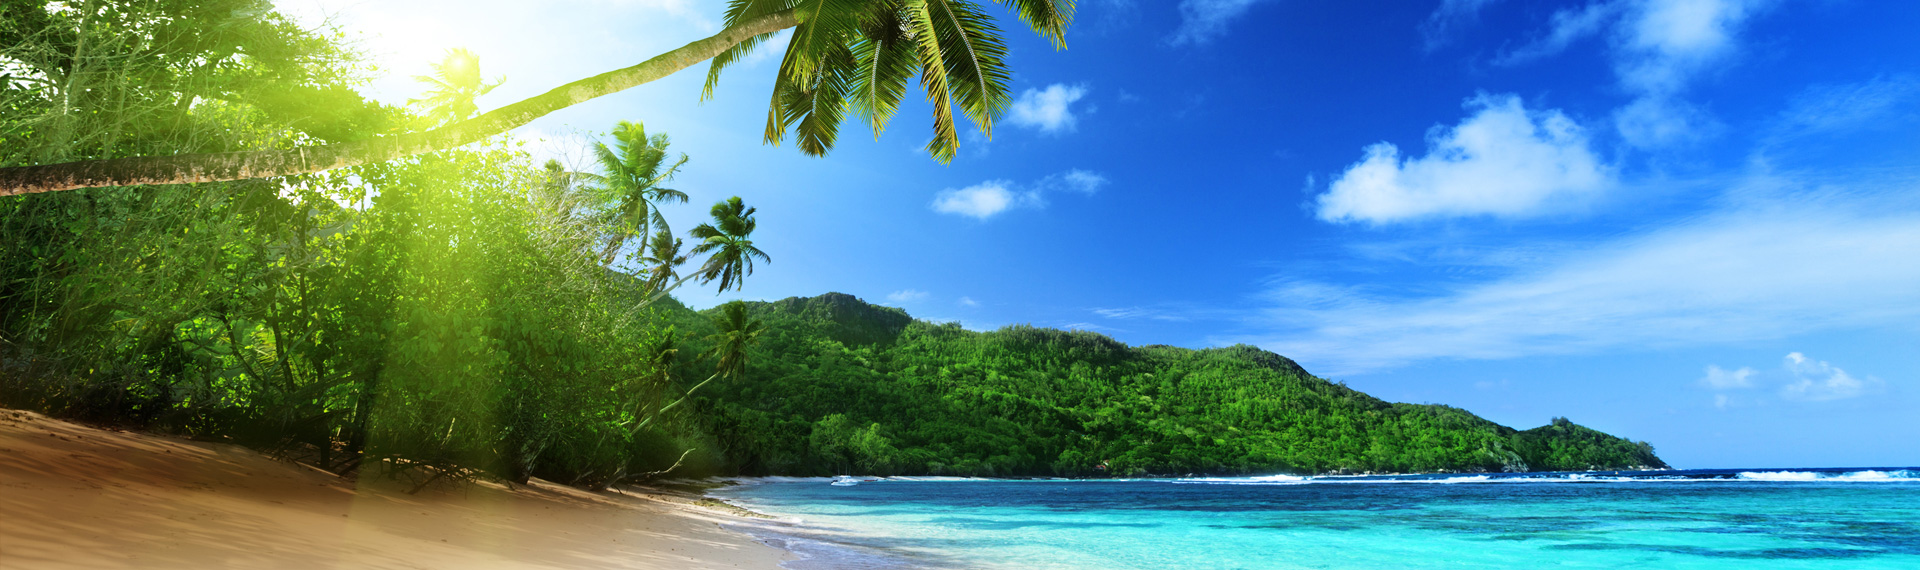 Enjoy the beach caribbean travel